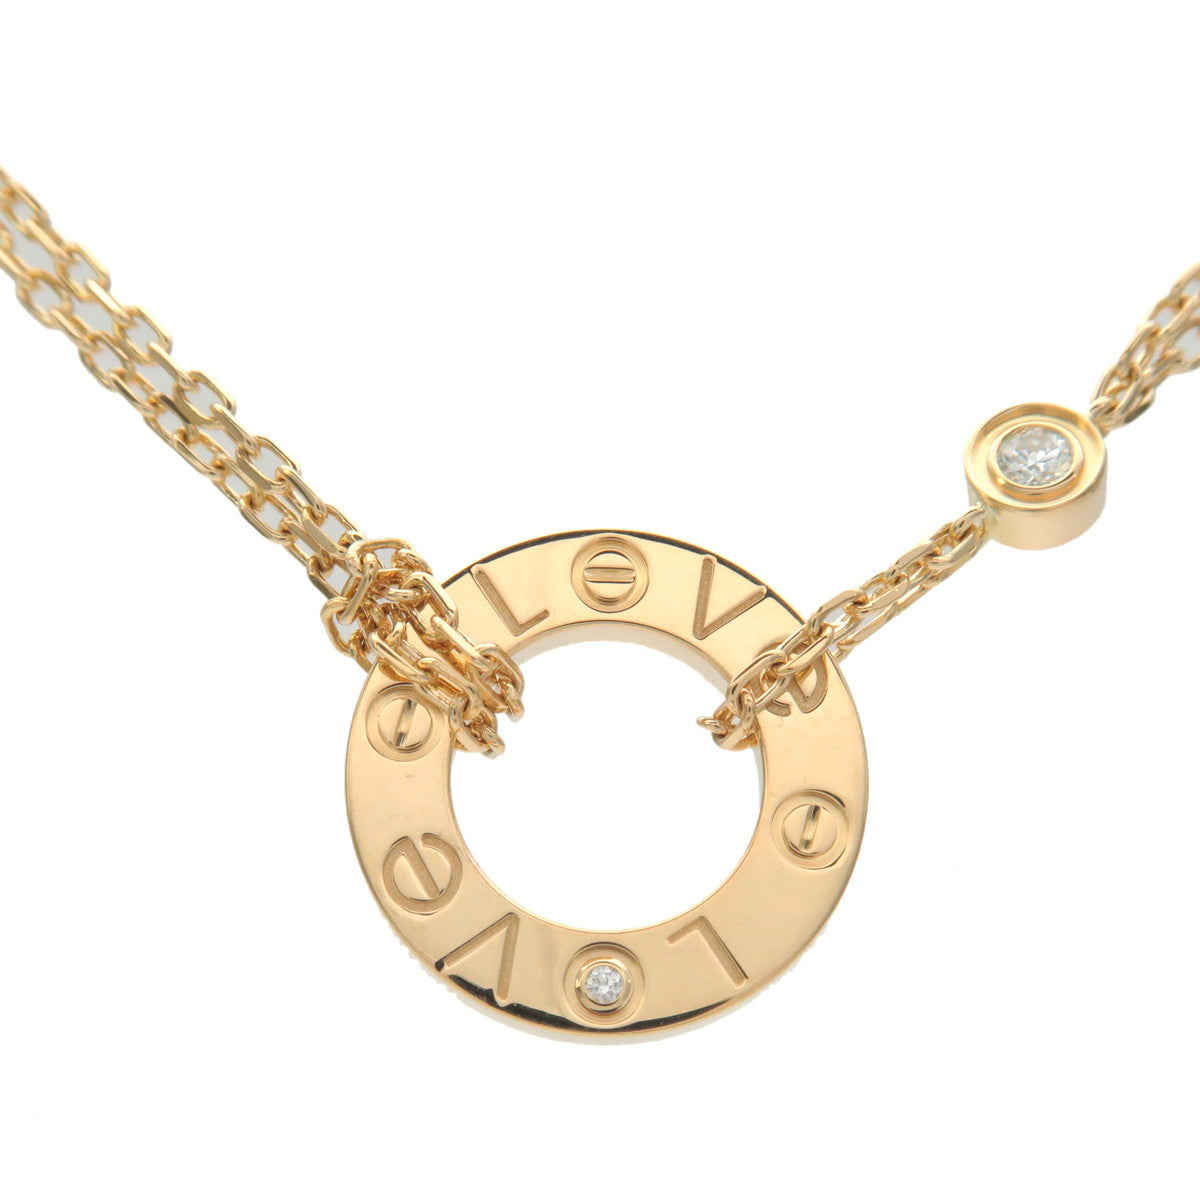 Cartier Circle Love Necklace